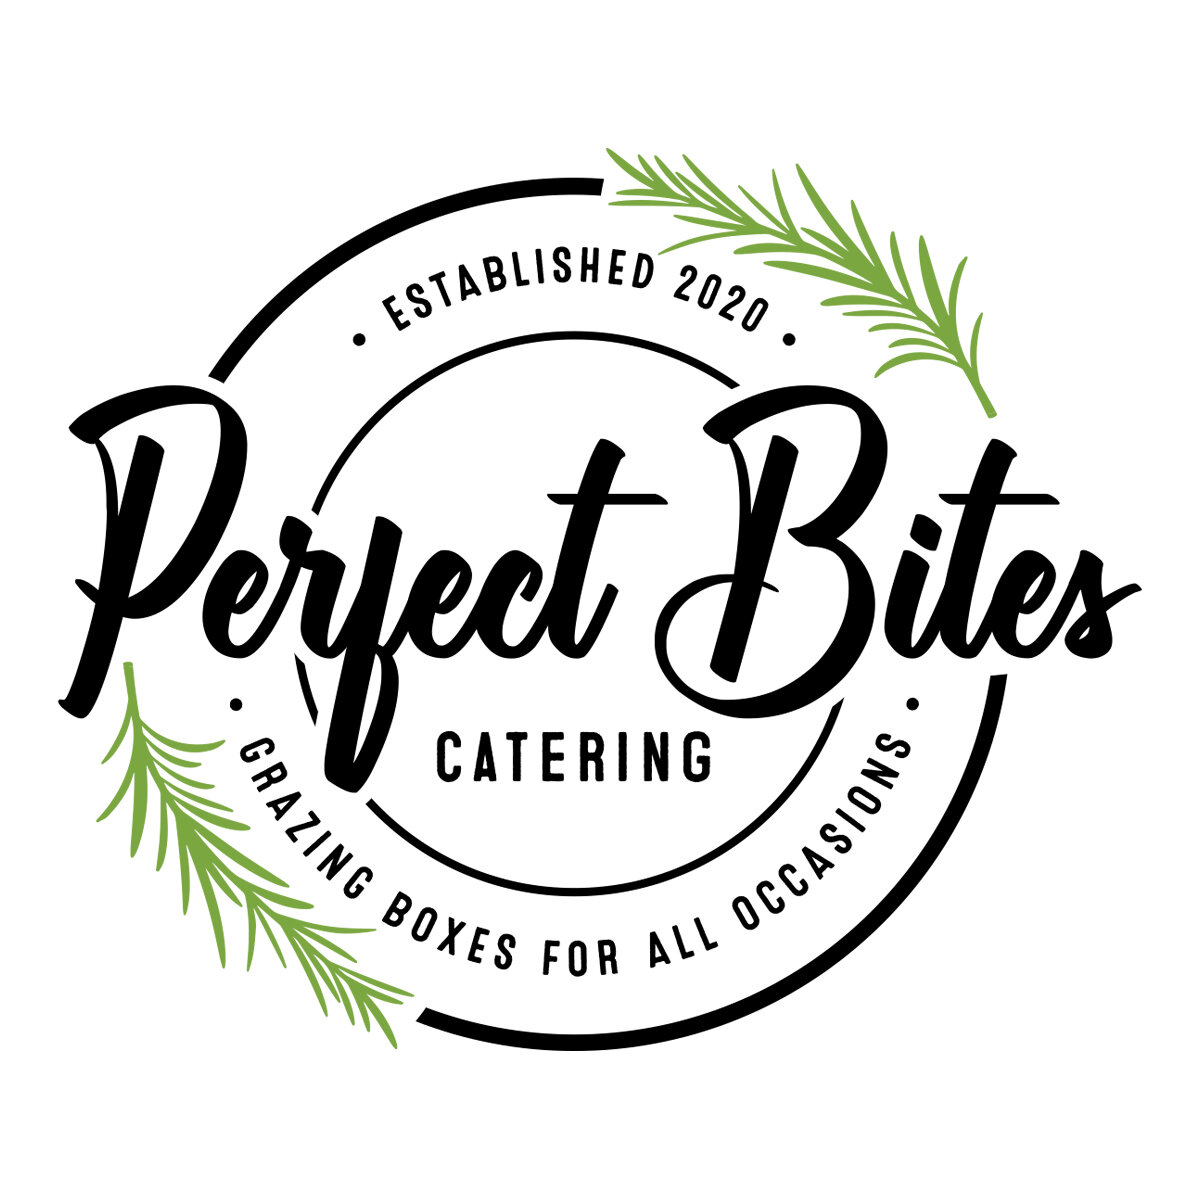 Perfect Bites Catering